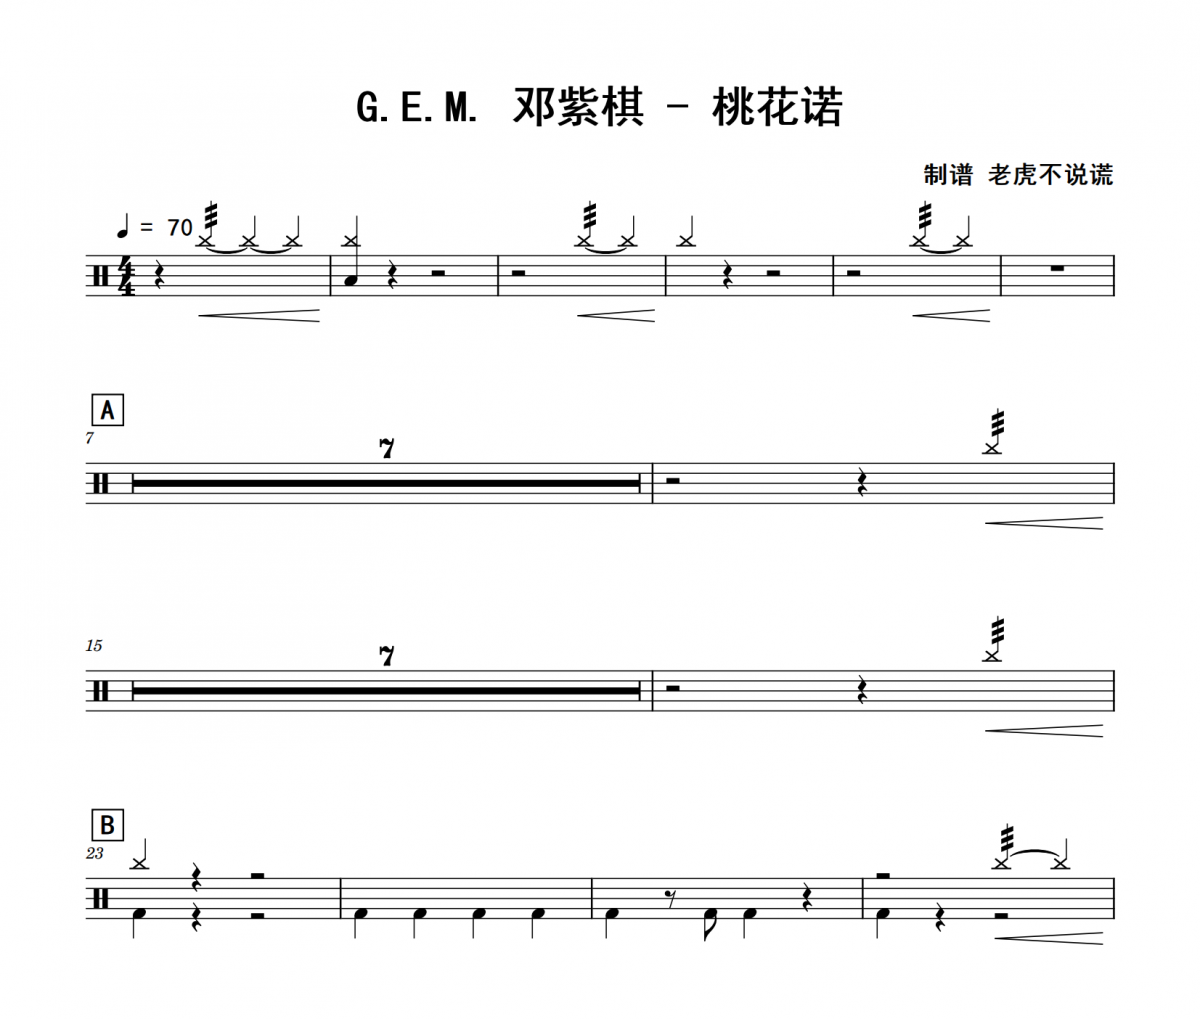 G.E.M. 邓紫棋《桃花诺》架子鼓|爵士鼓|鼓谱